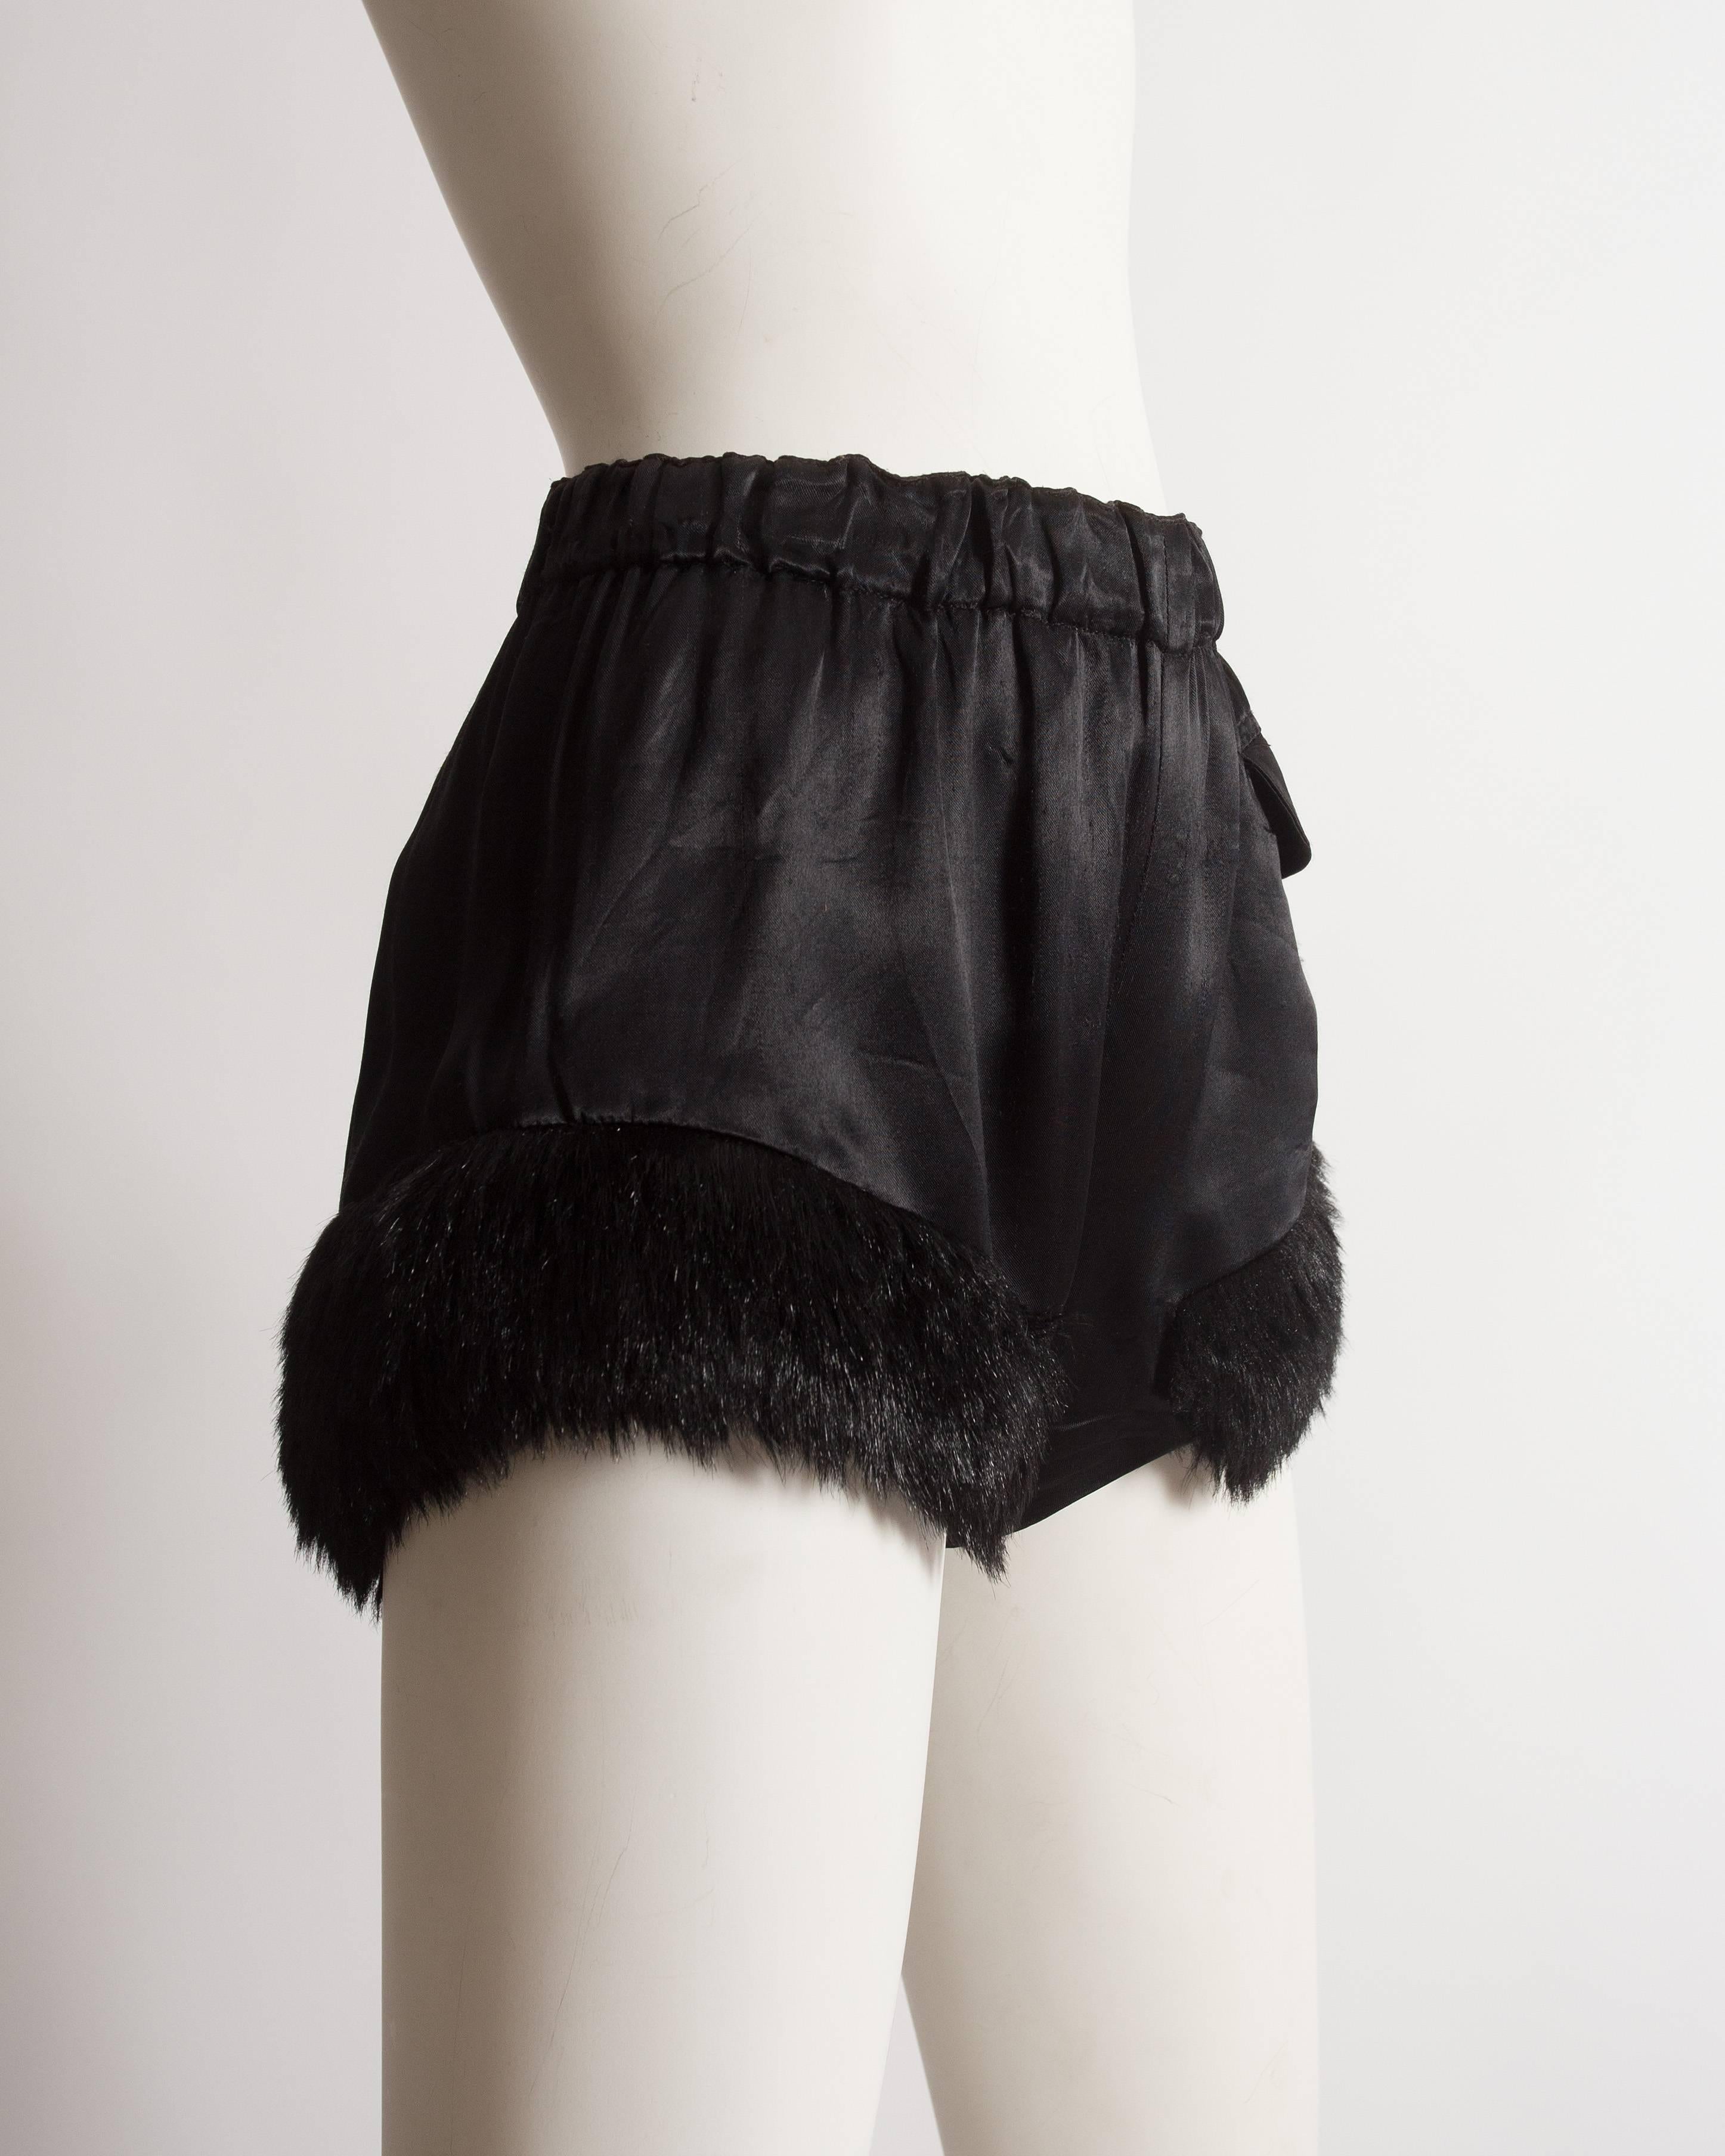 Vivienne Westwood black satin mini shorts with faux fur trim and elastic waist.

Autumn-Winter 1991